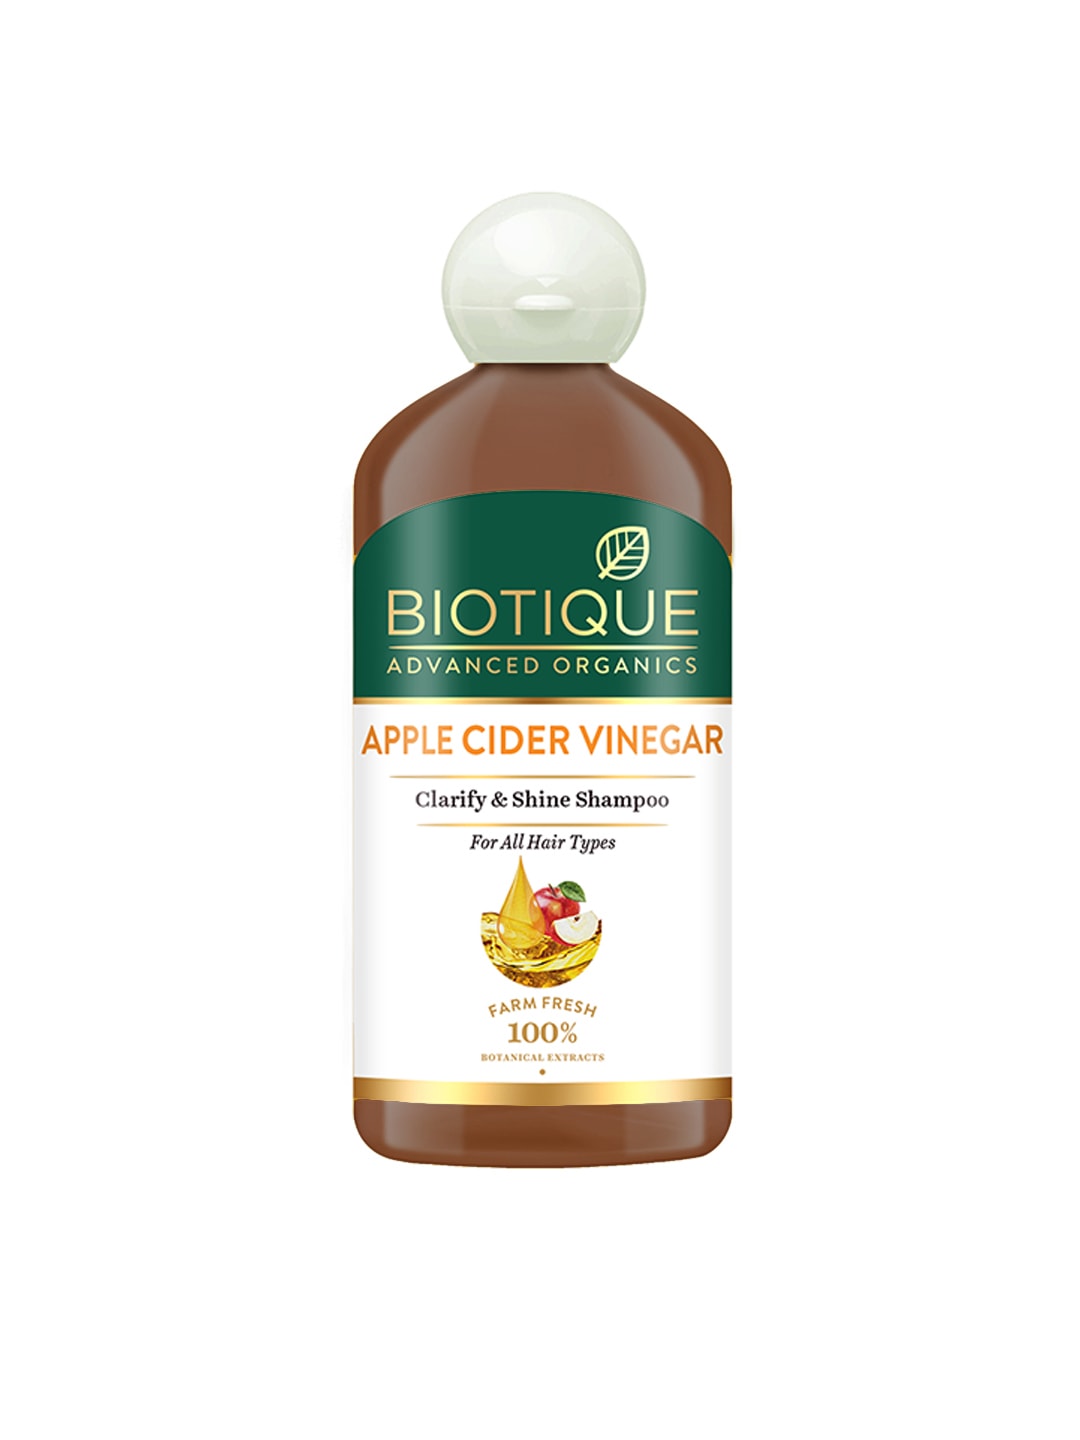 Biotique Unisex Advanced Organics Apple Cider Vinegar Clarify & Shine Shampoo 300 ml Price in India